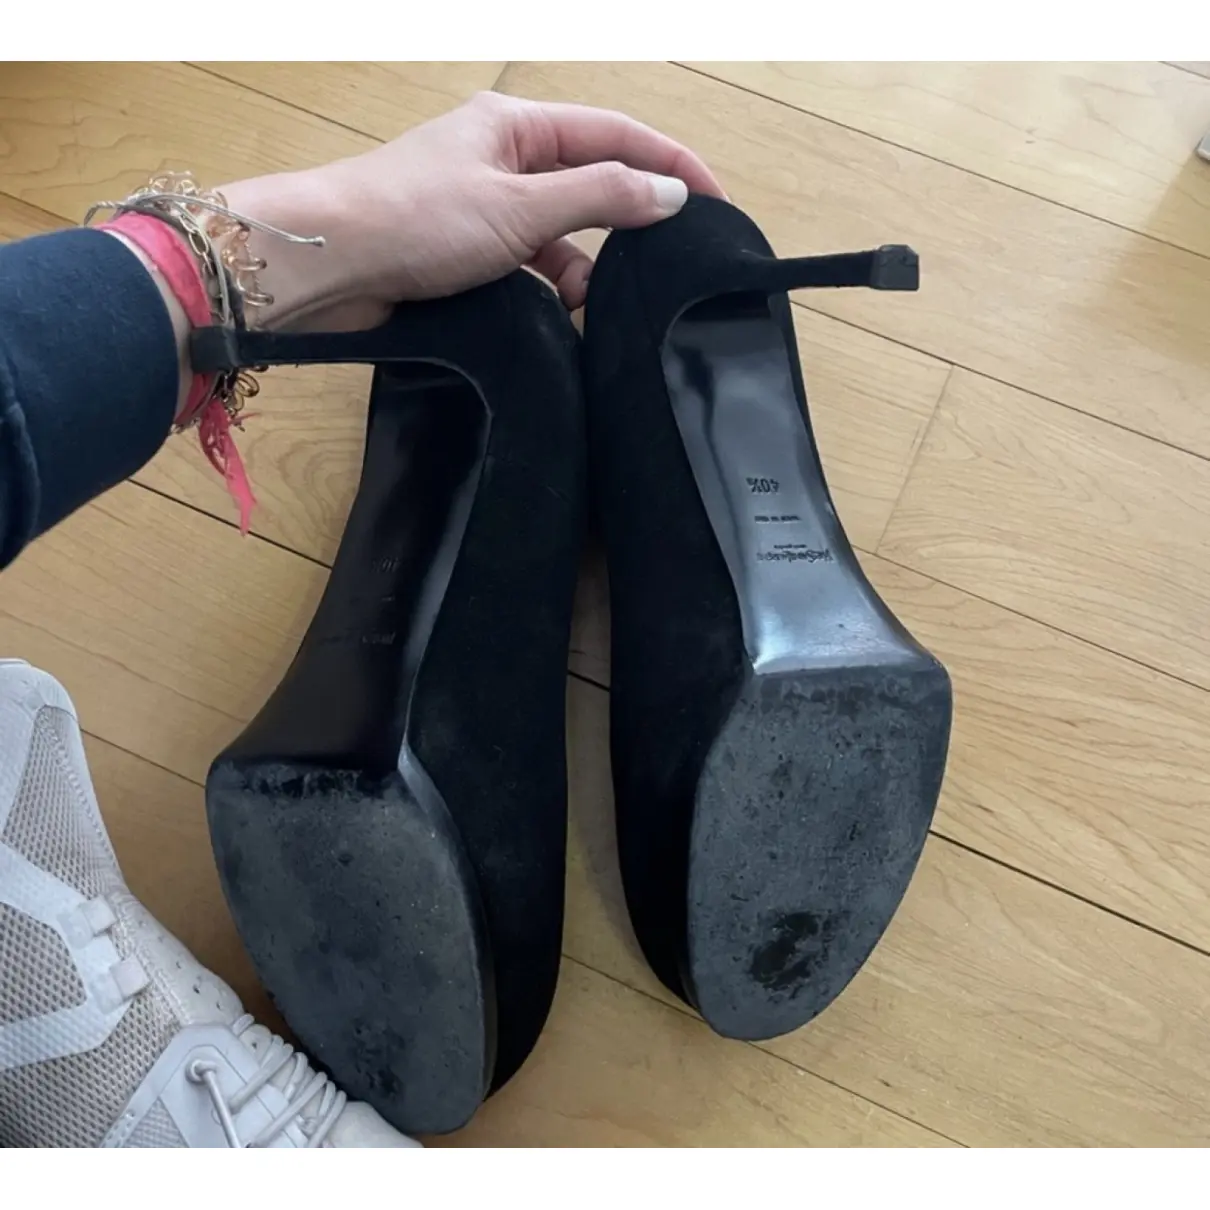 Trib Too heels Yves Saint Laurent